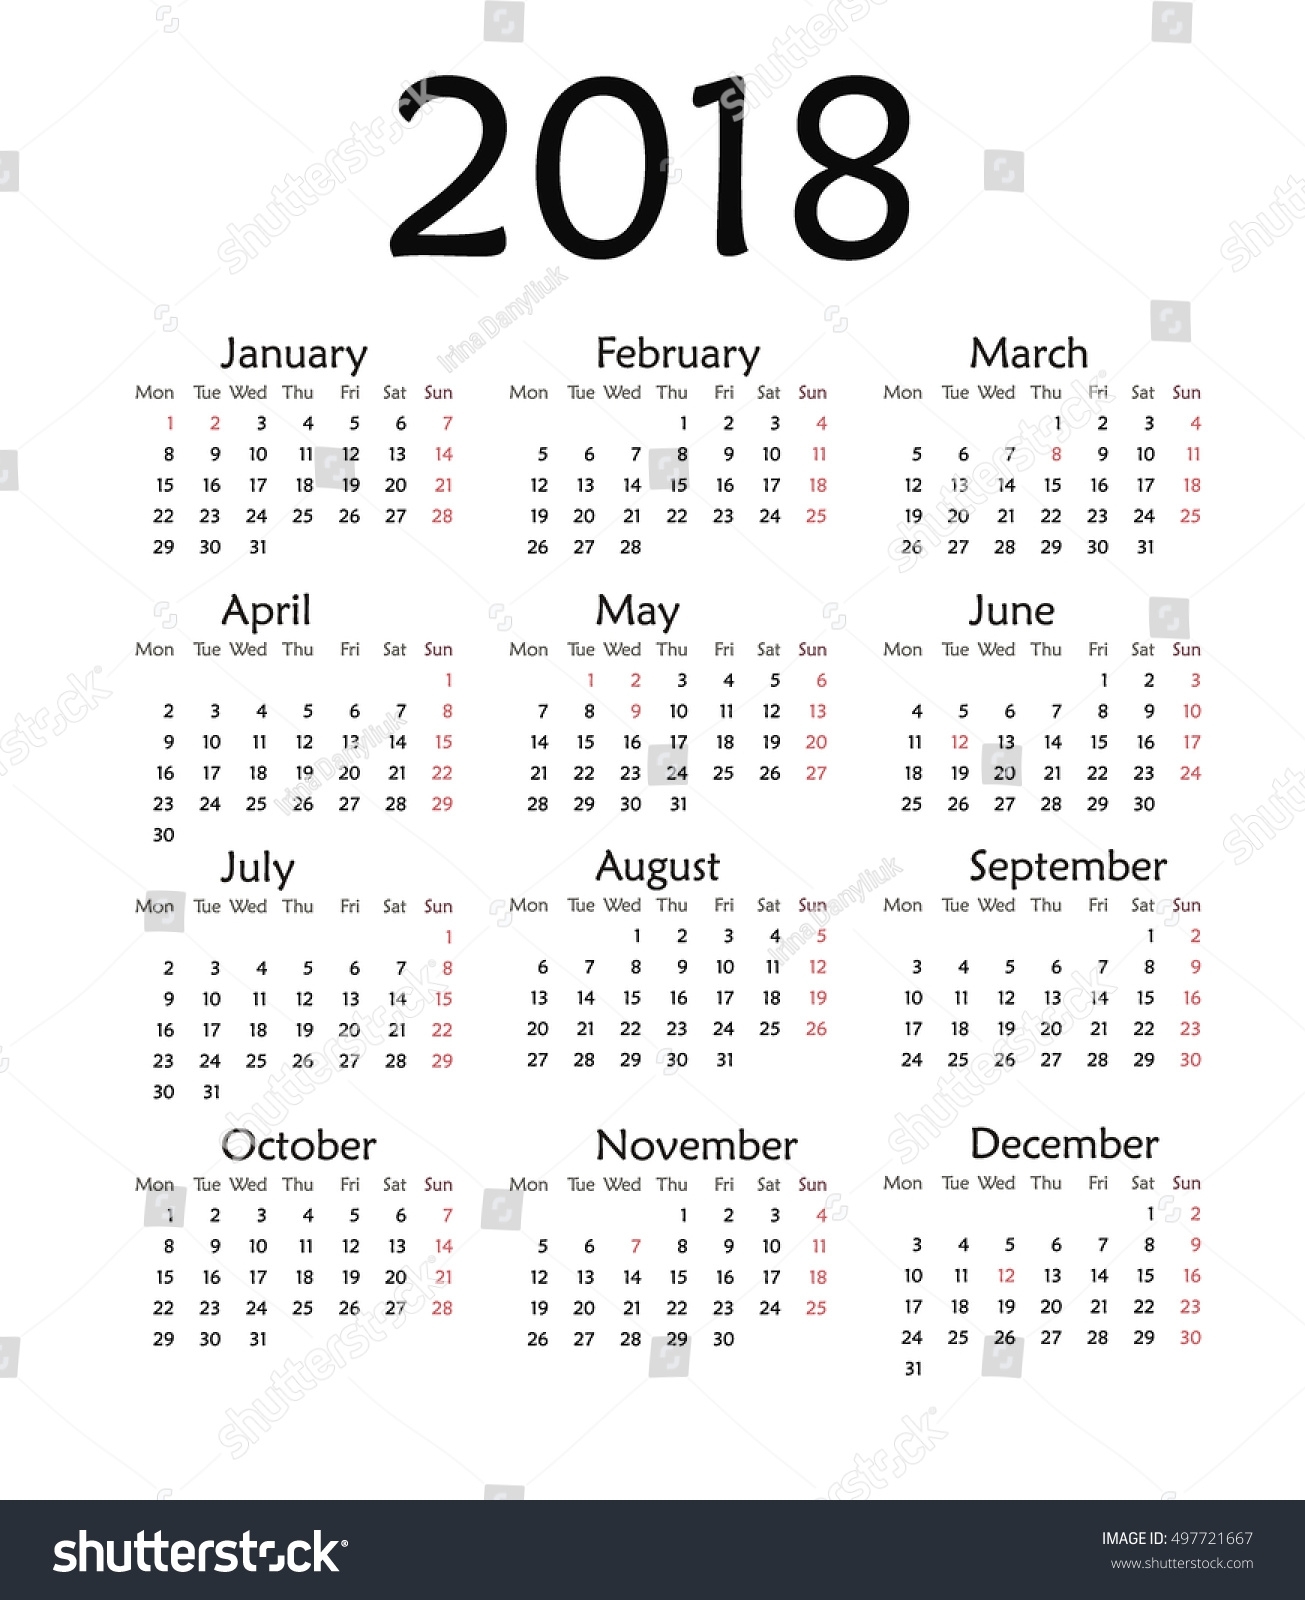 microsoft word calendar 2017 2018 template